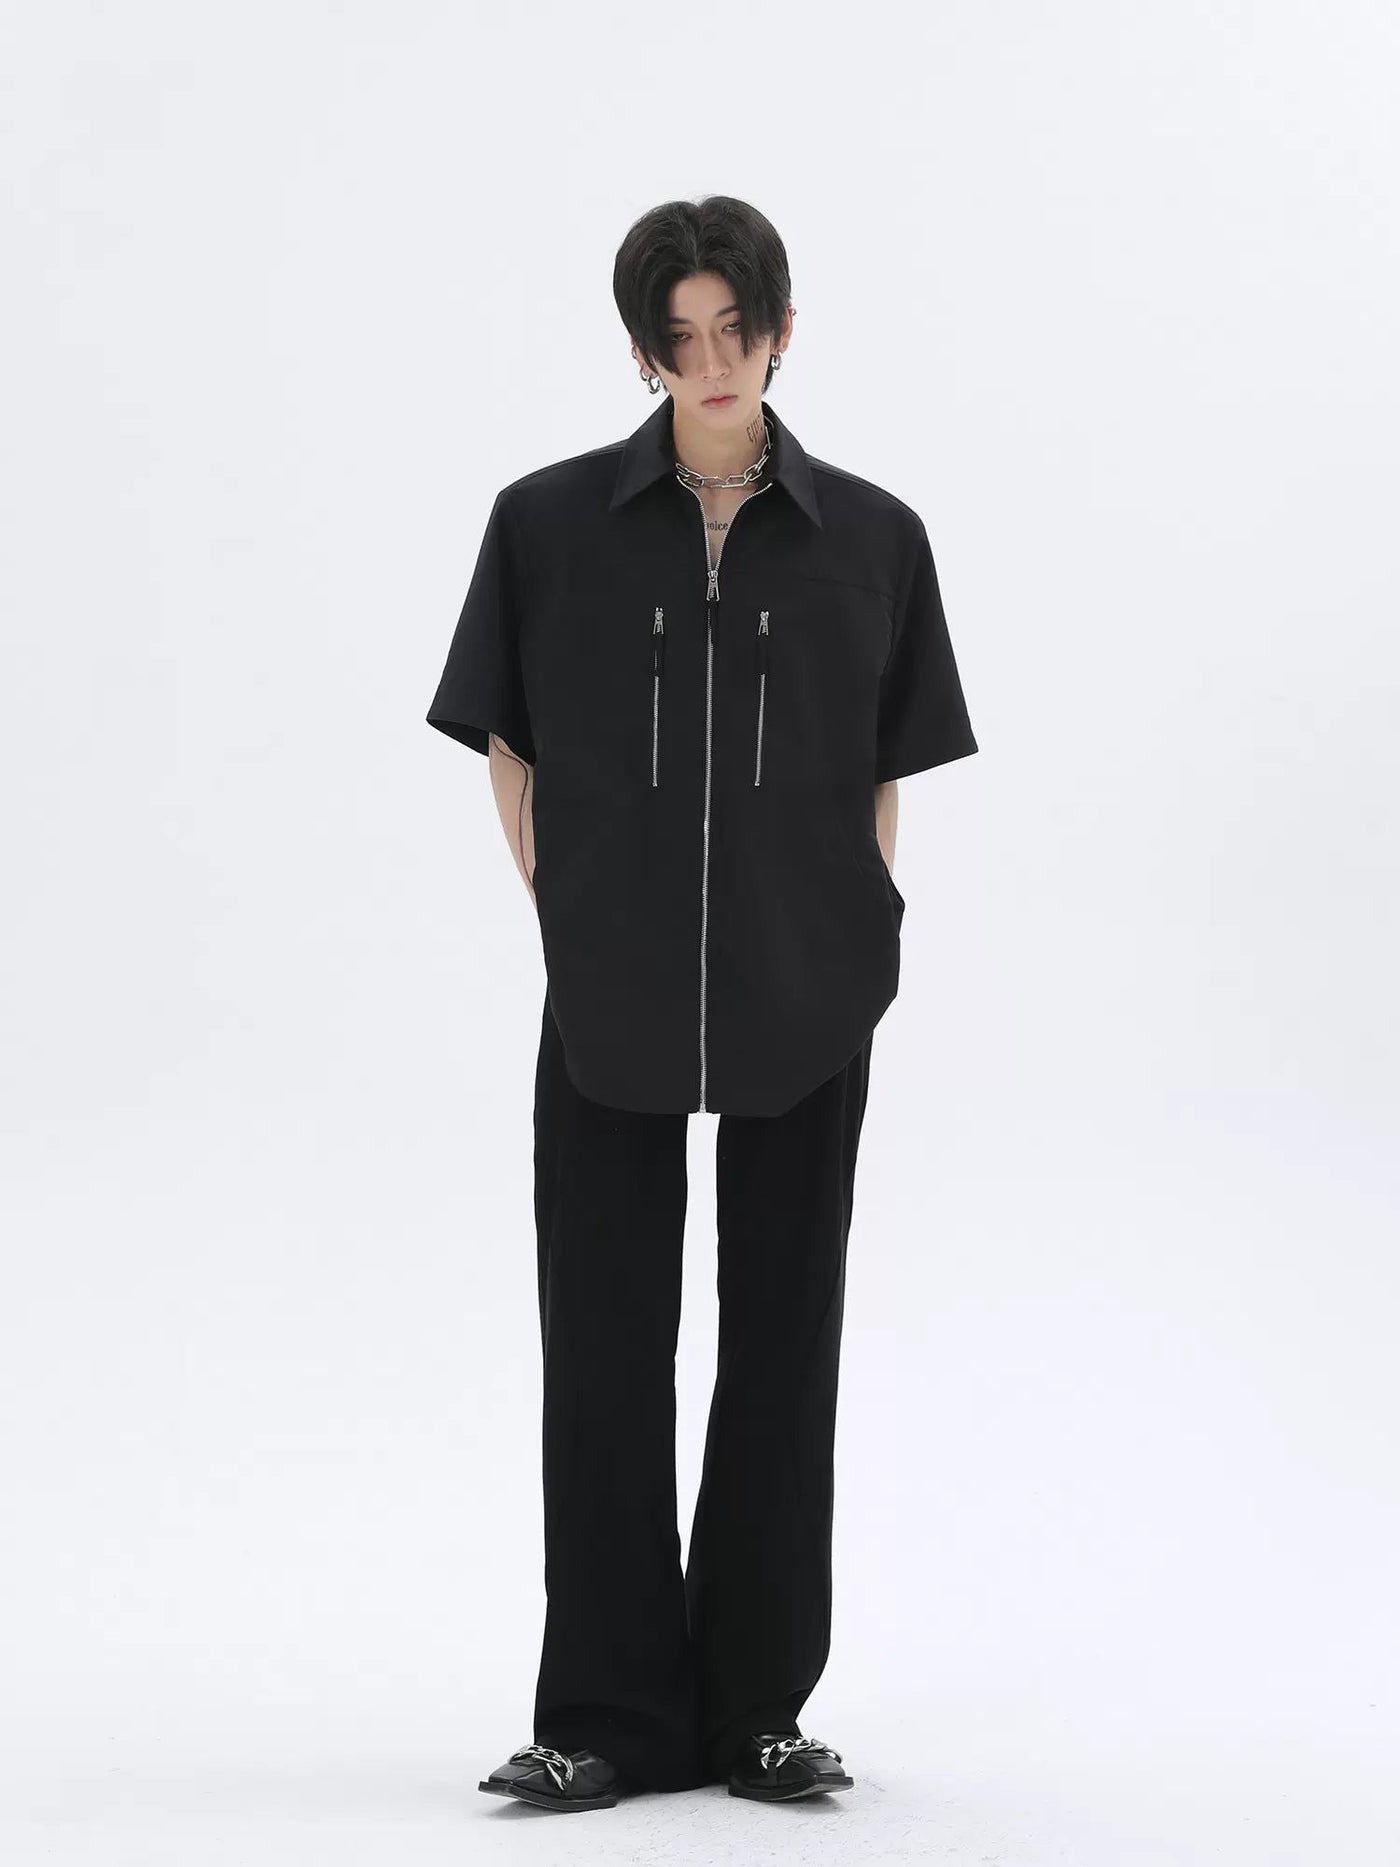 Multi-Zipper Minimal Shirt Korean Street Fashion Shirt By HARH Shop Online at OH Vault